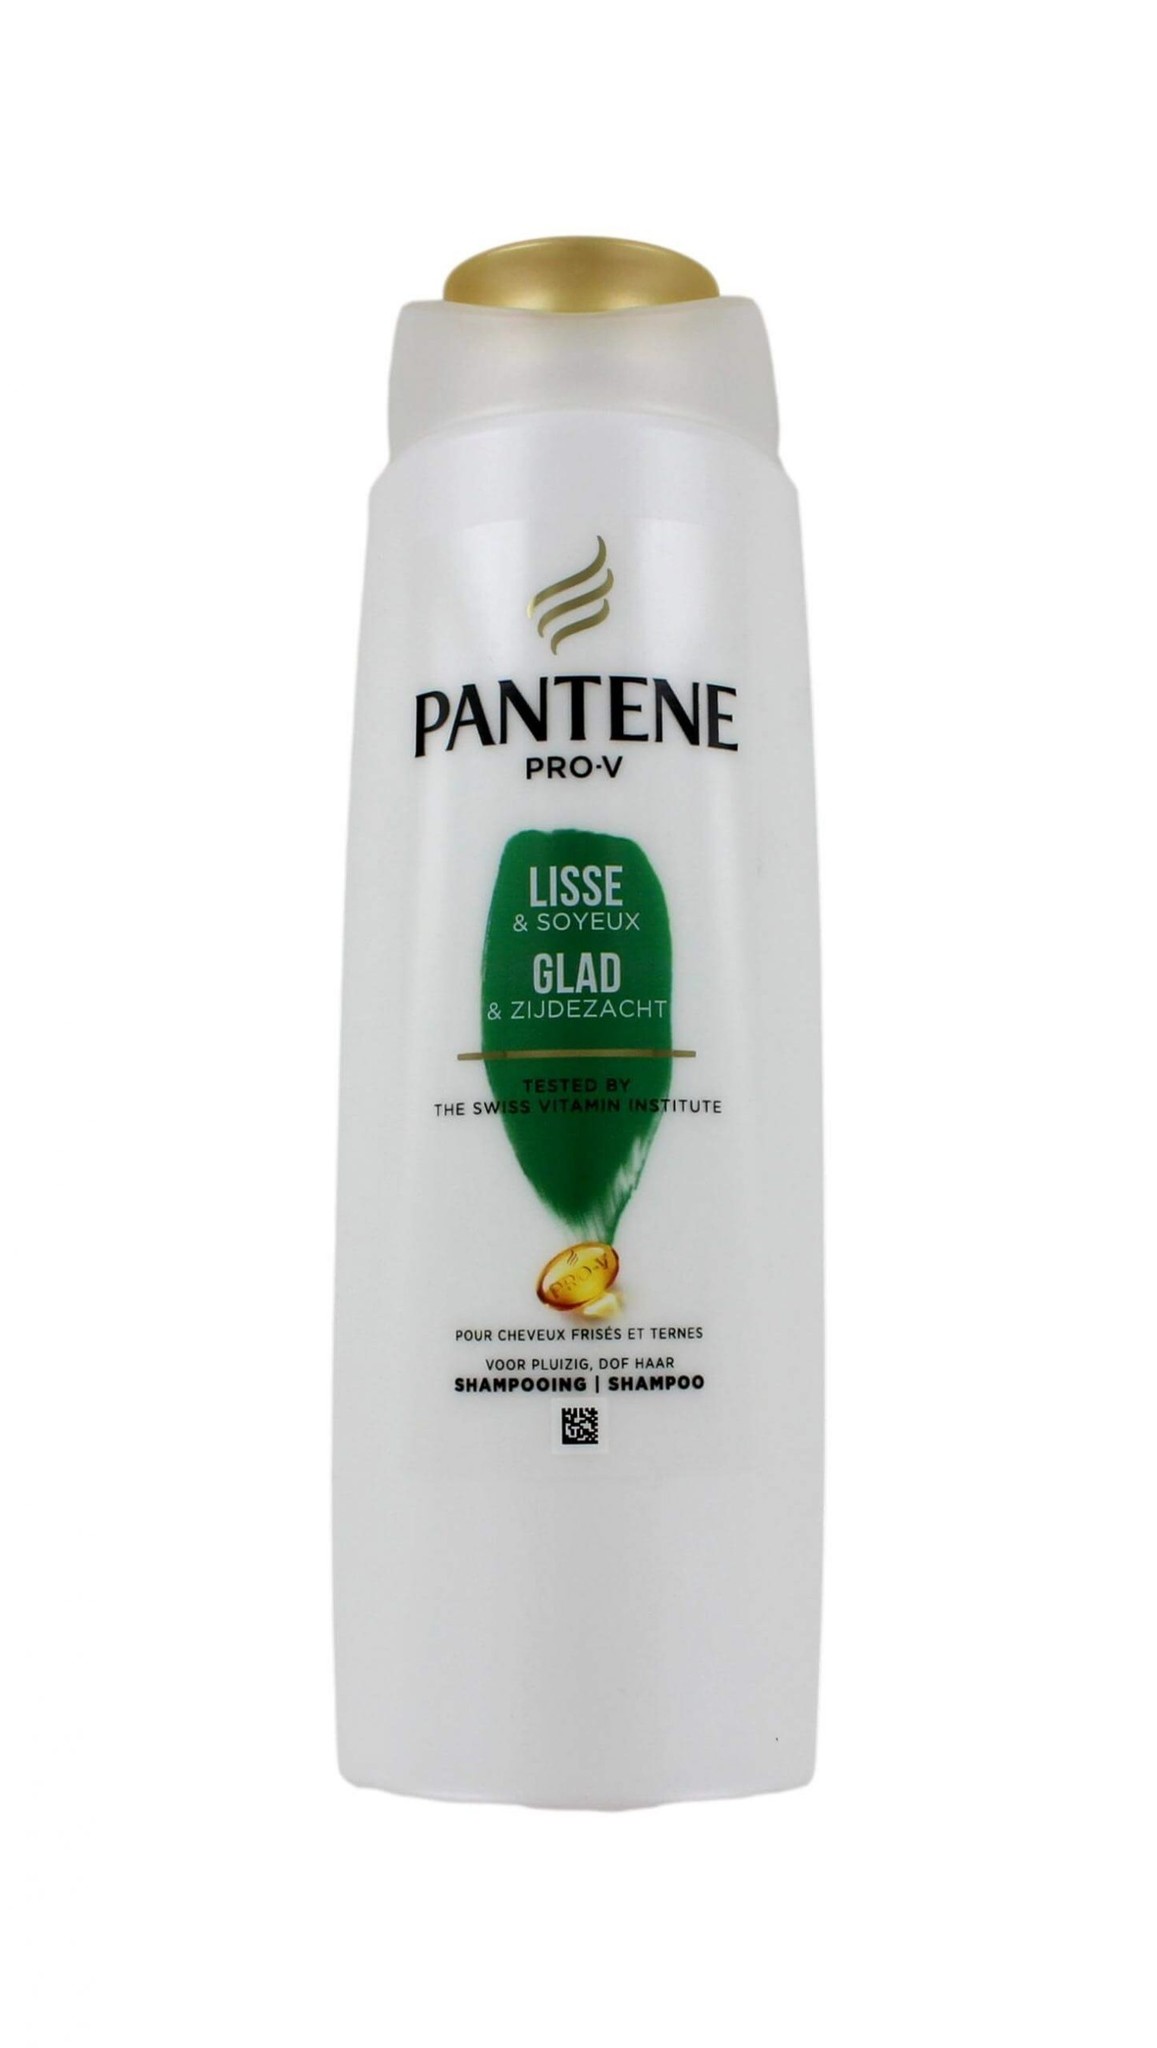 Pantene Shampoo Smooth & Sleek 225 ml